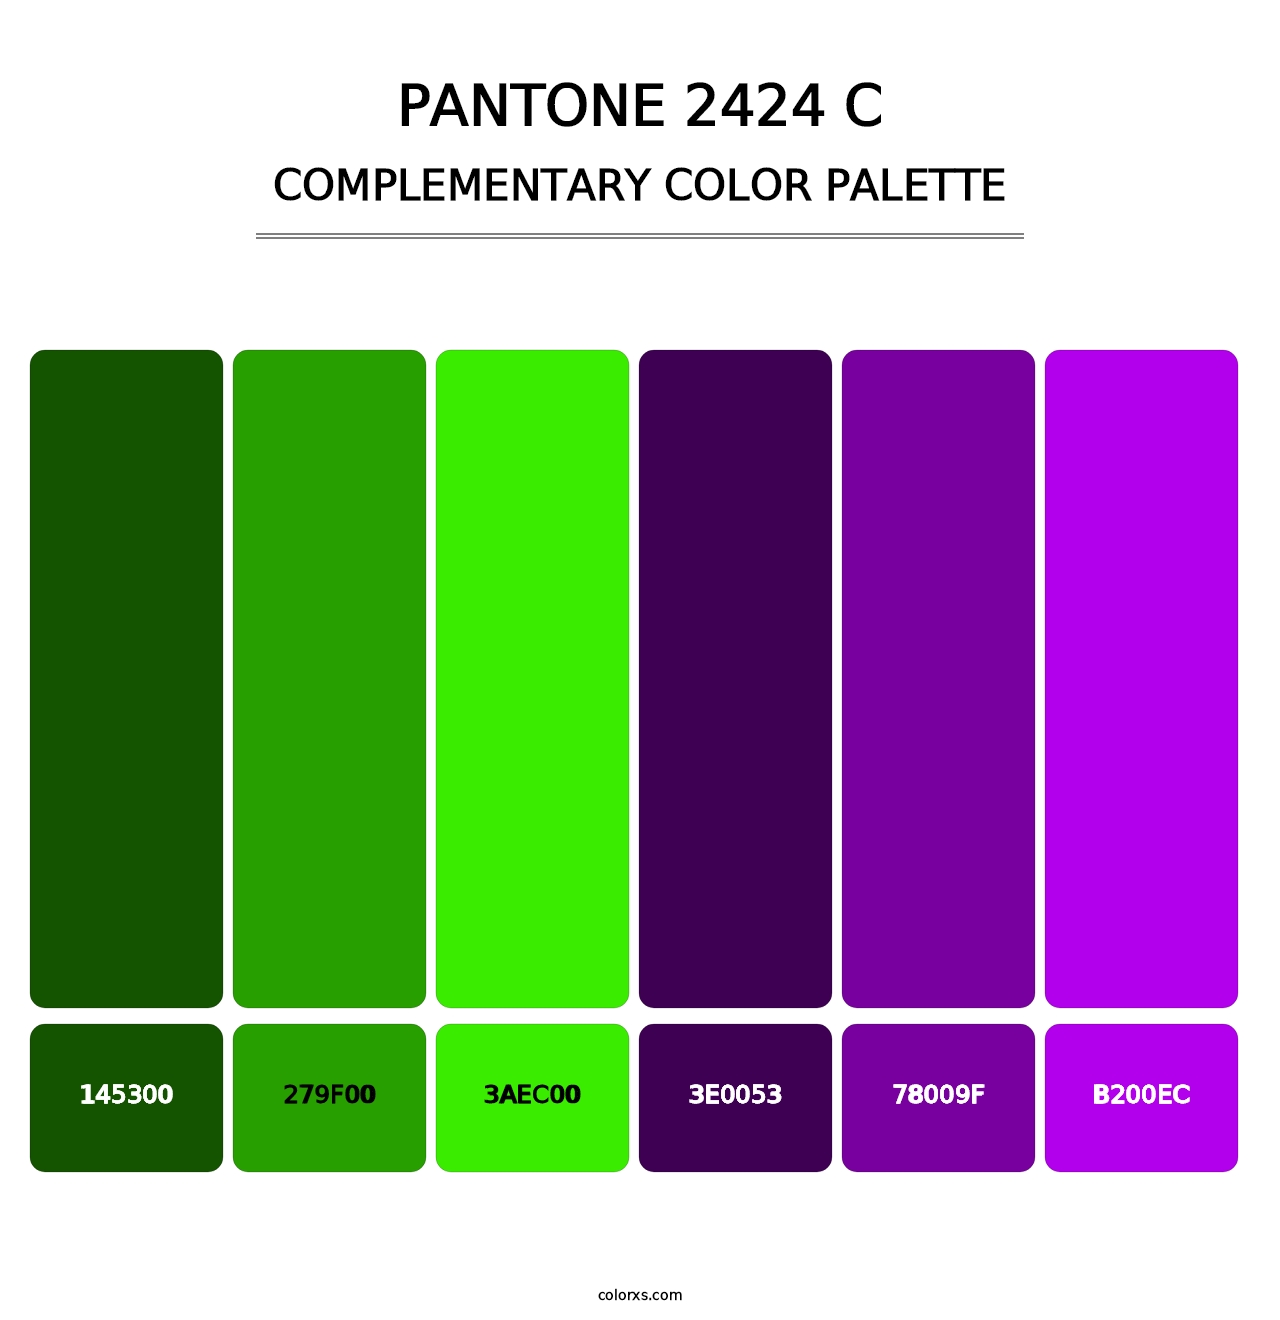 PANTONE 2424 C - Complementary Color Palette